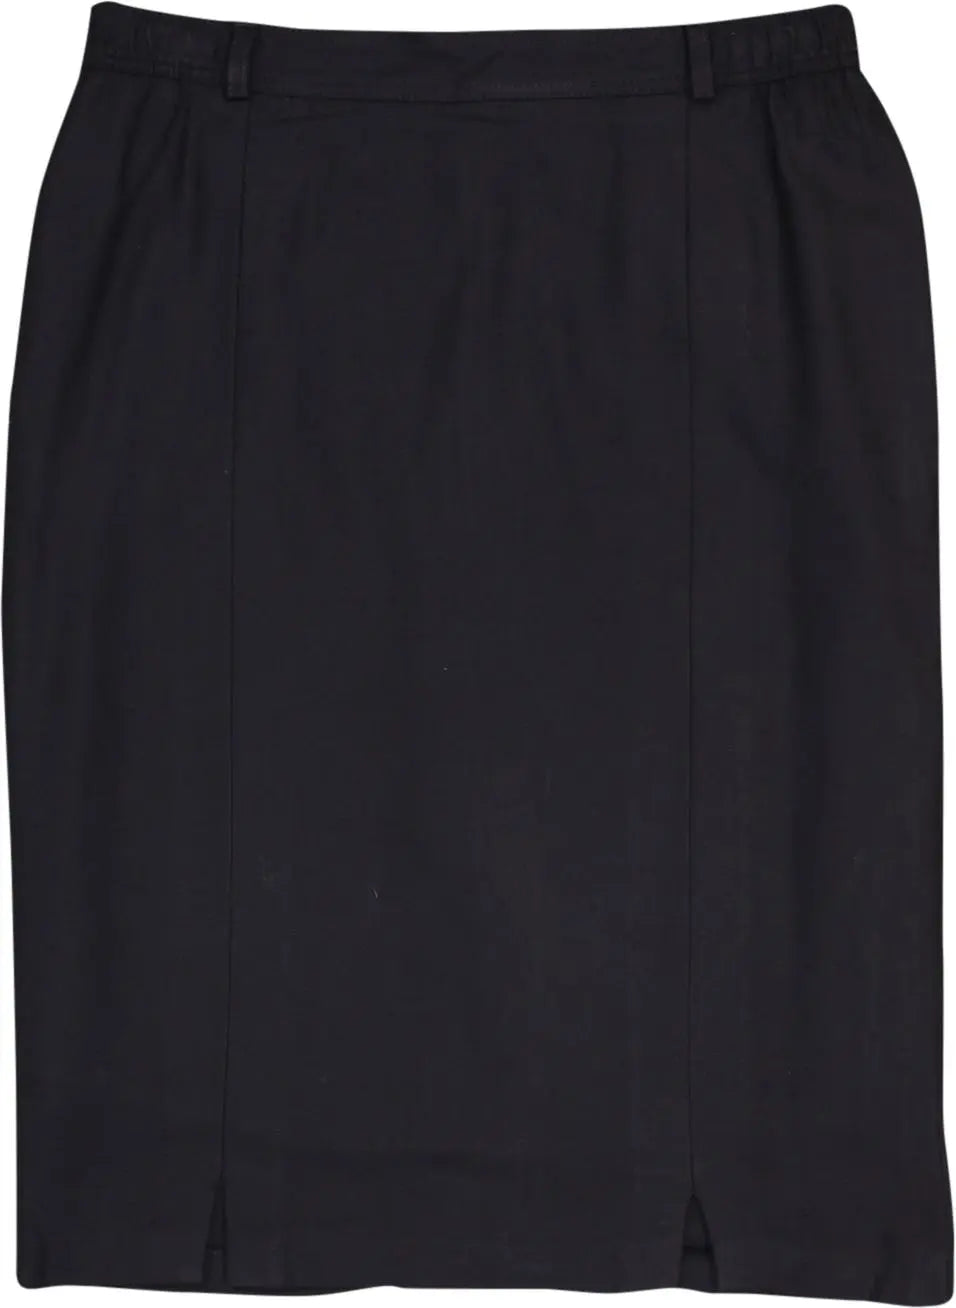 Seda Modell - Black Wool Skirt- ThriftTale.com - Vintage and second handclothing